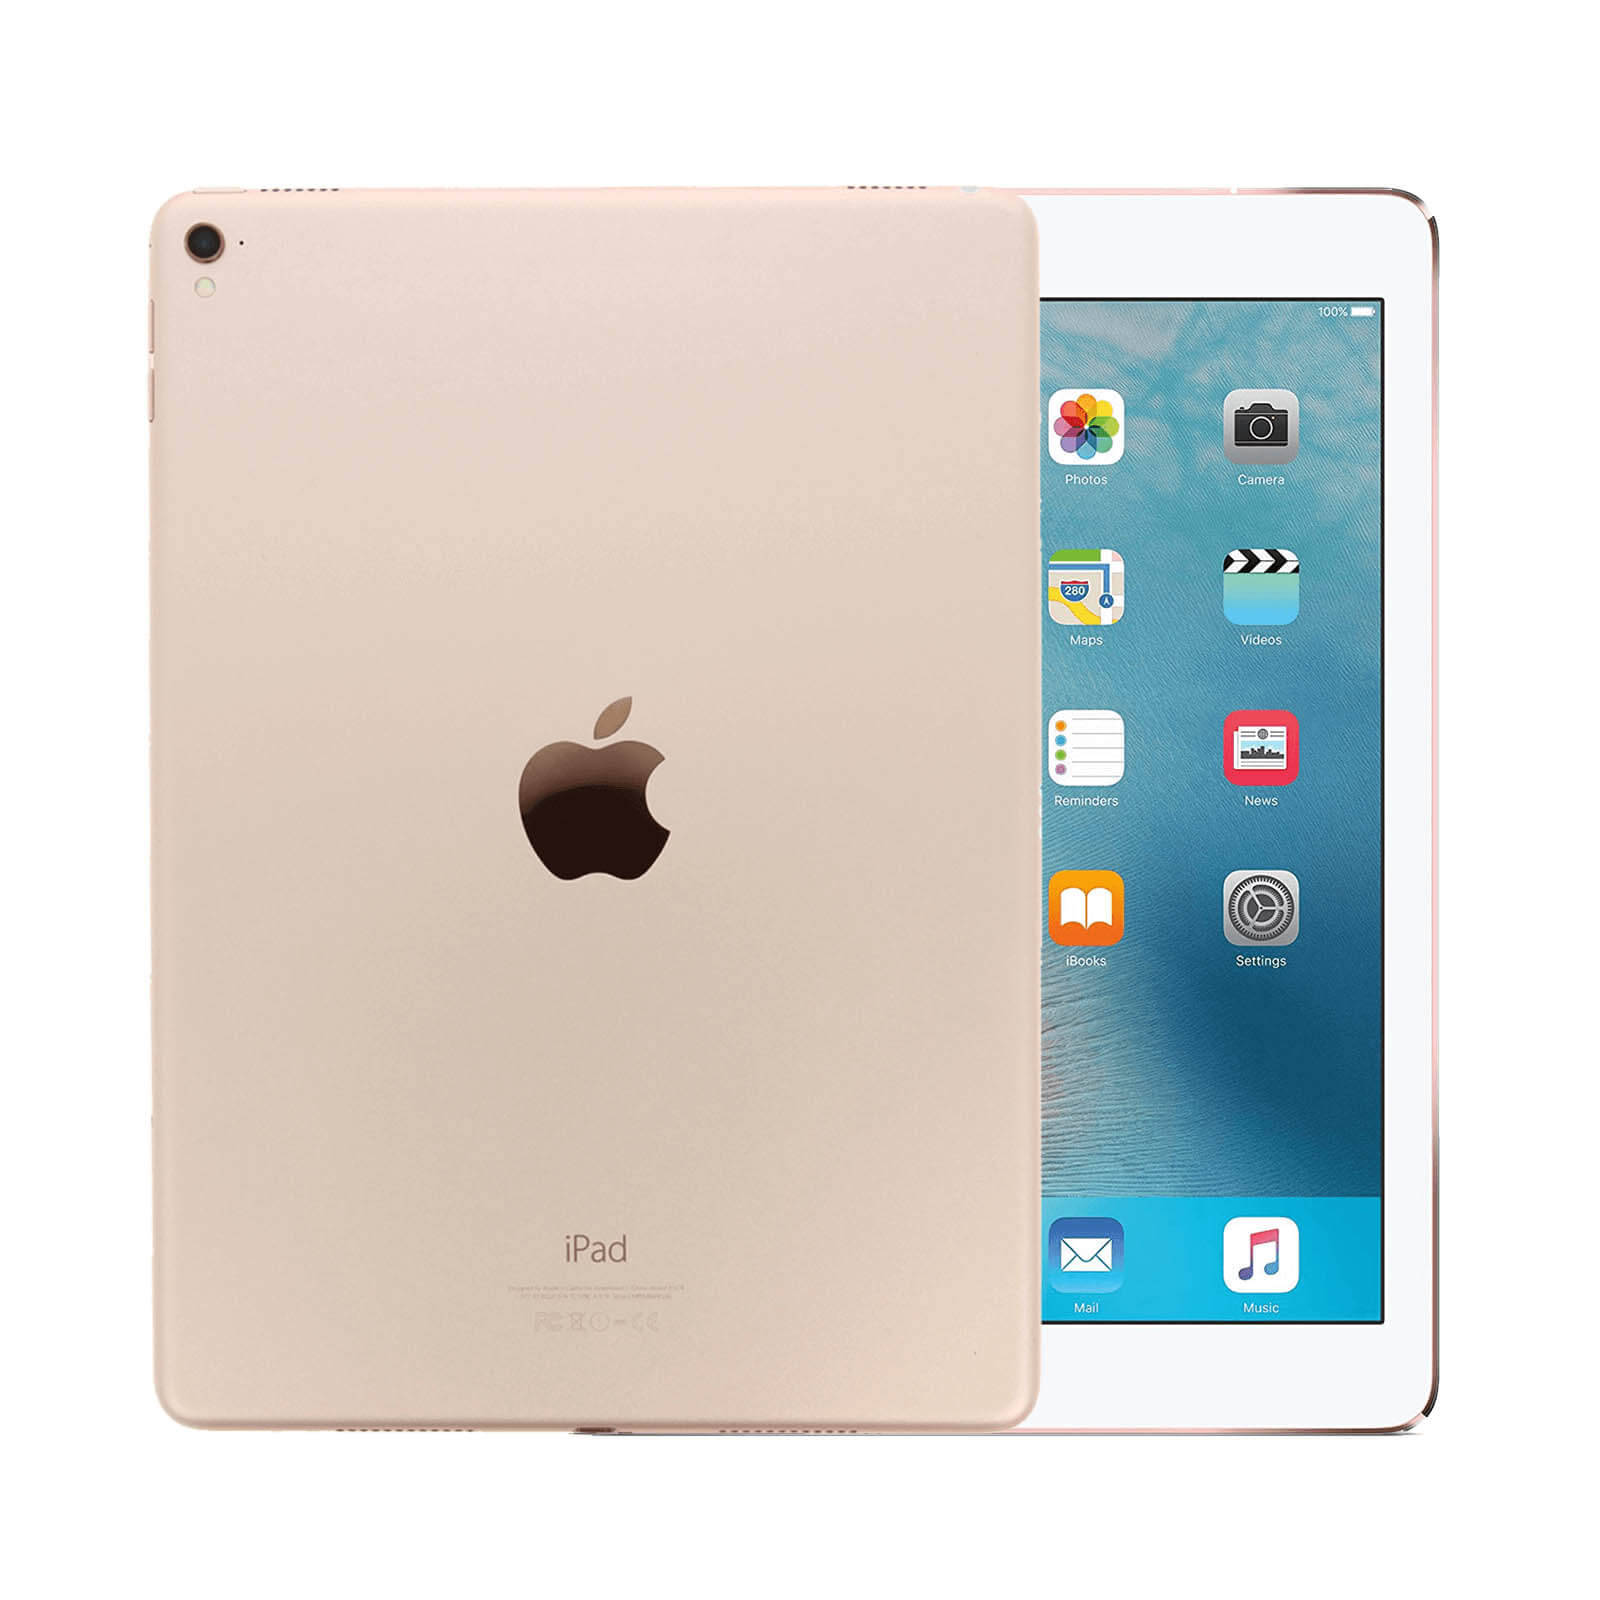 iPad Pro 9.7 Inch 256GB Gold Pristine - WiFi